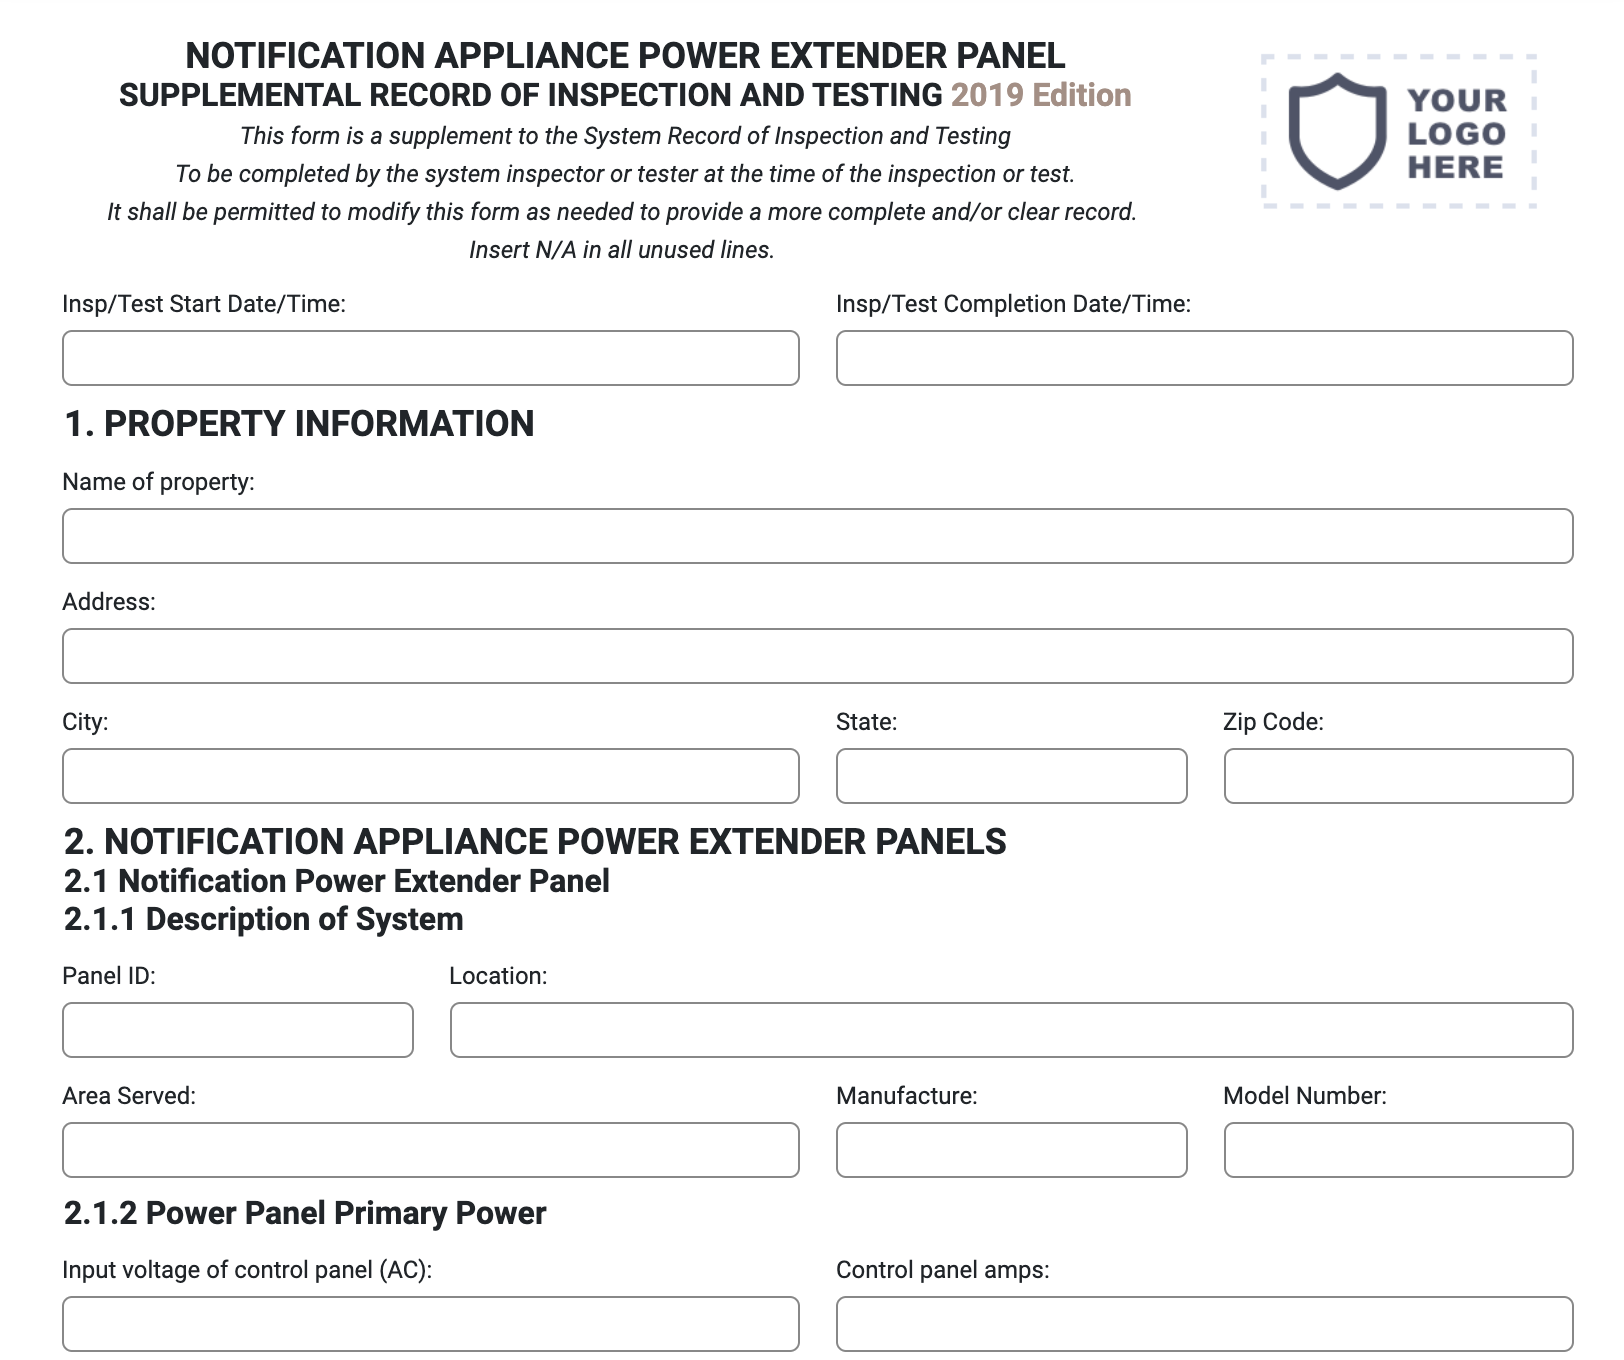 Notification Appliance Power Extender Panel Form